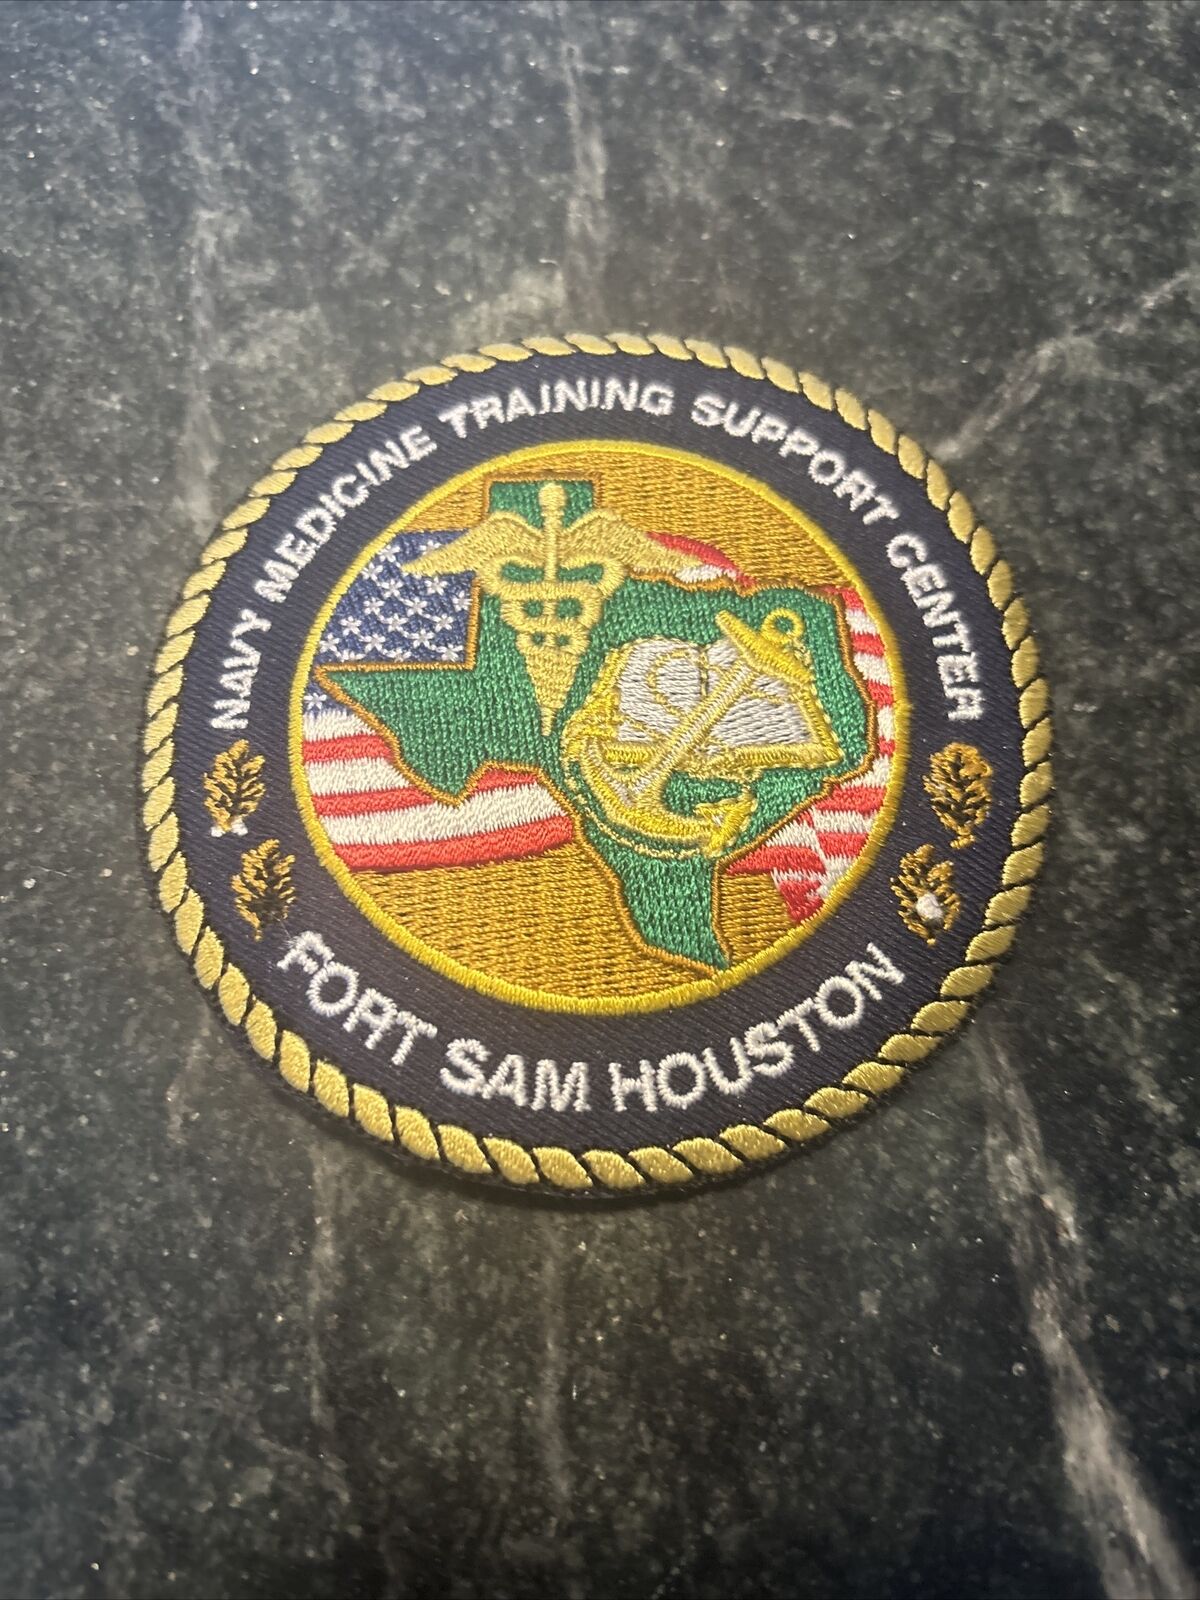 USN US Navy Medicine Training Support Center Fort Sam Houston PATCH Rare Iron On